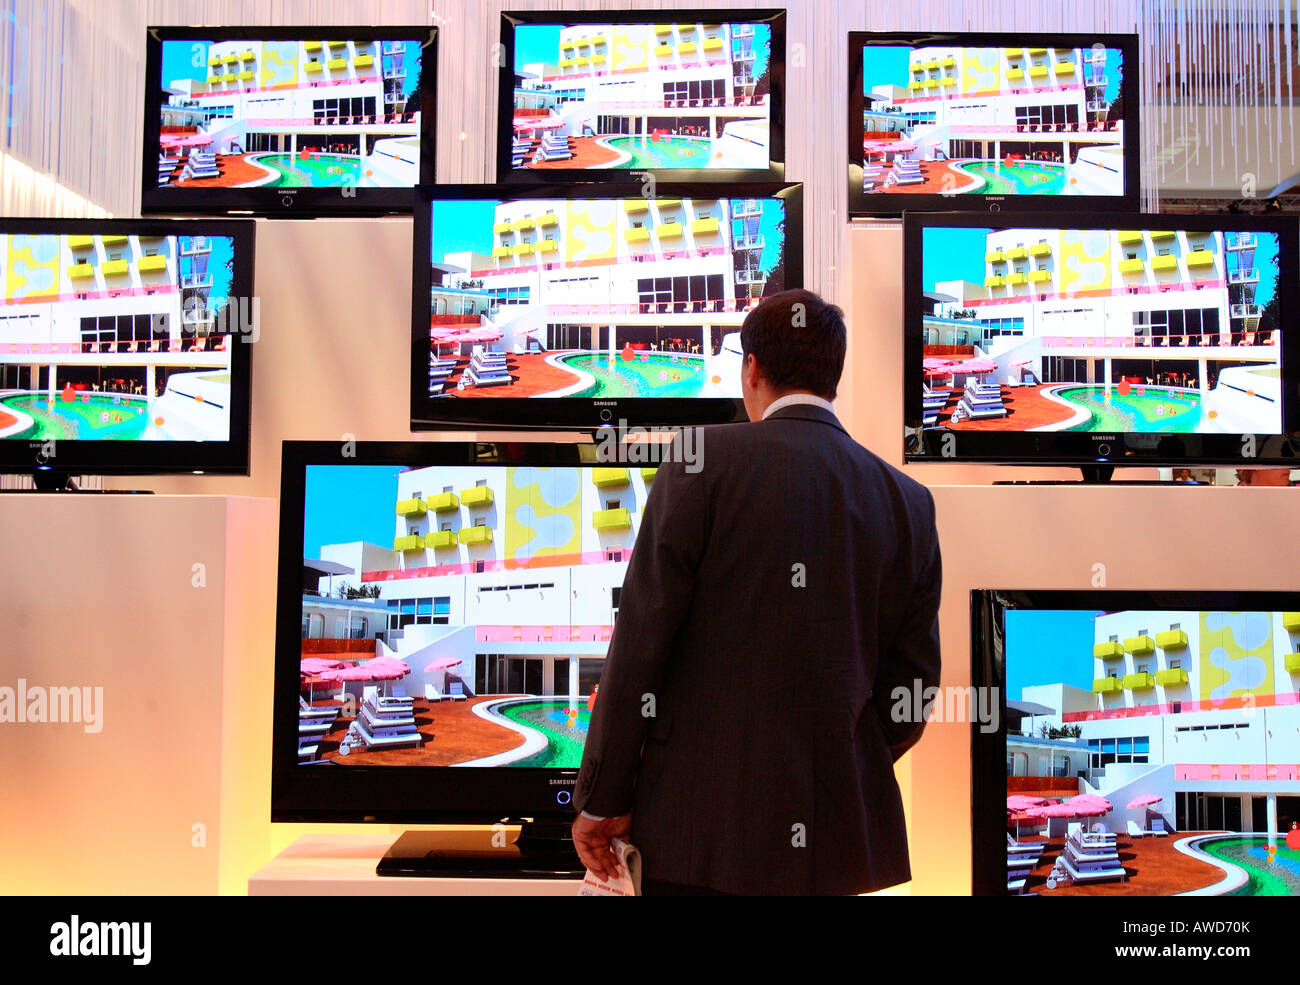 Cliente mira TV con pantallas planas - IFA 2007 (Consumer Electronics Unlimited) en Berlín, Alemania, Europa Foto de stock